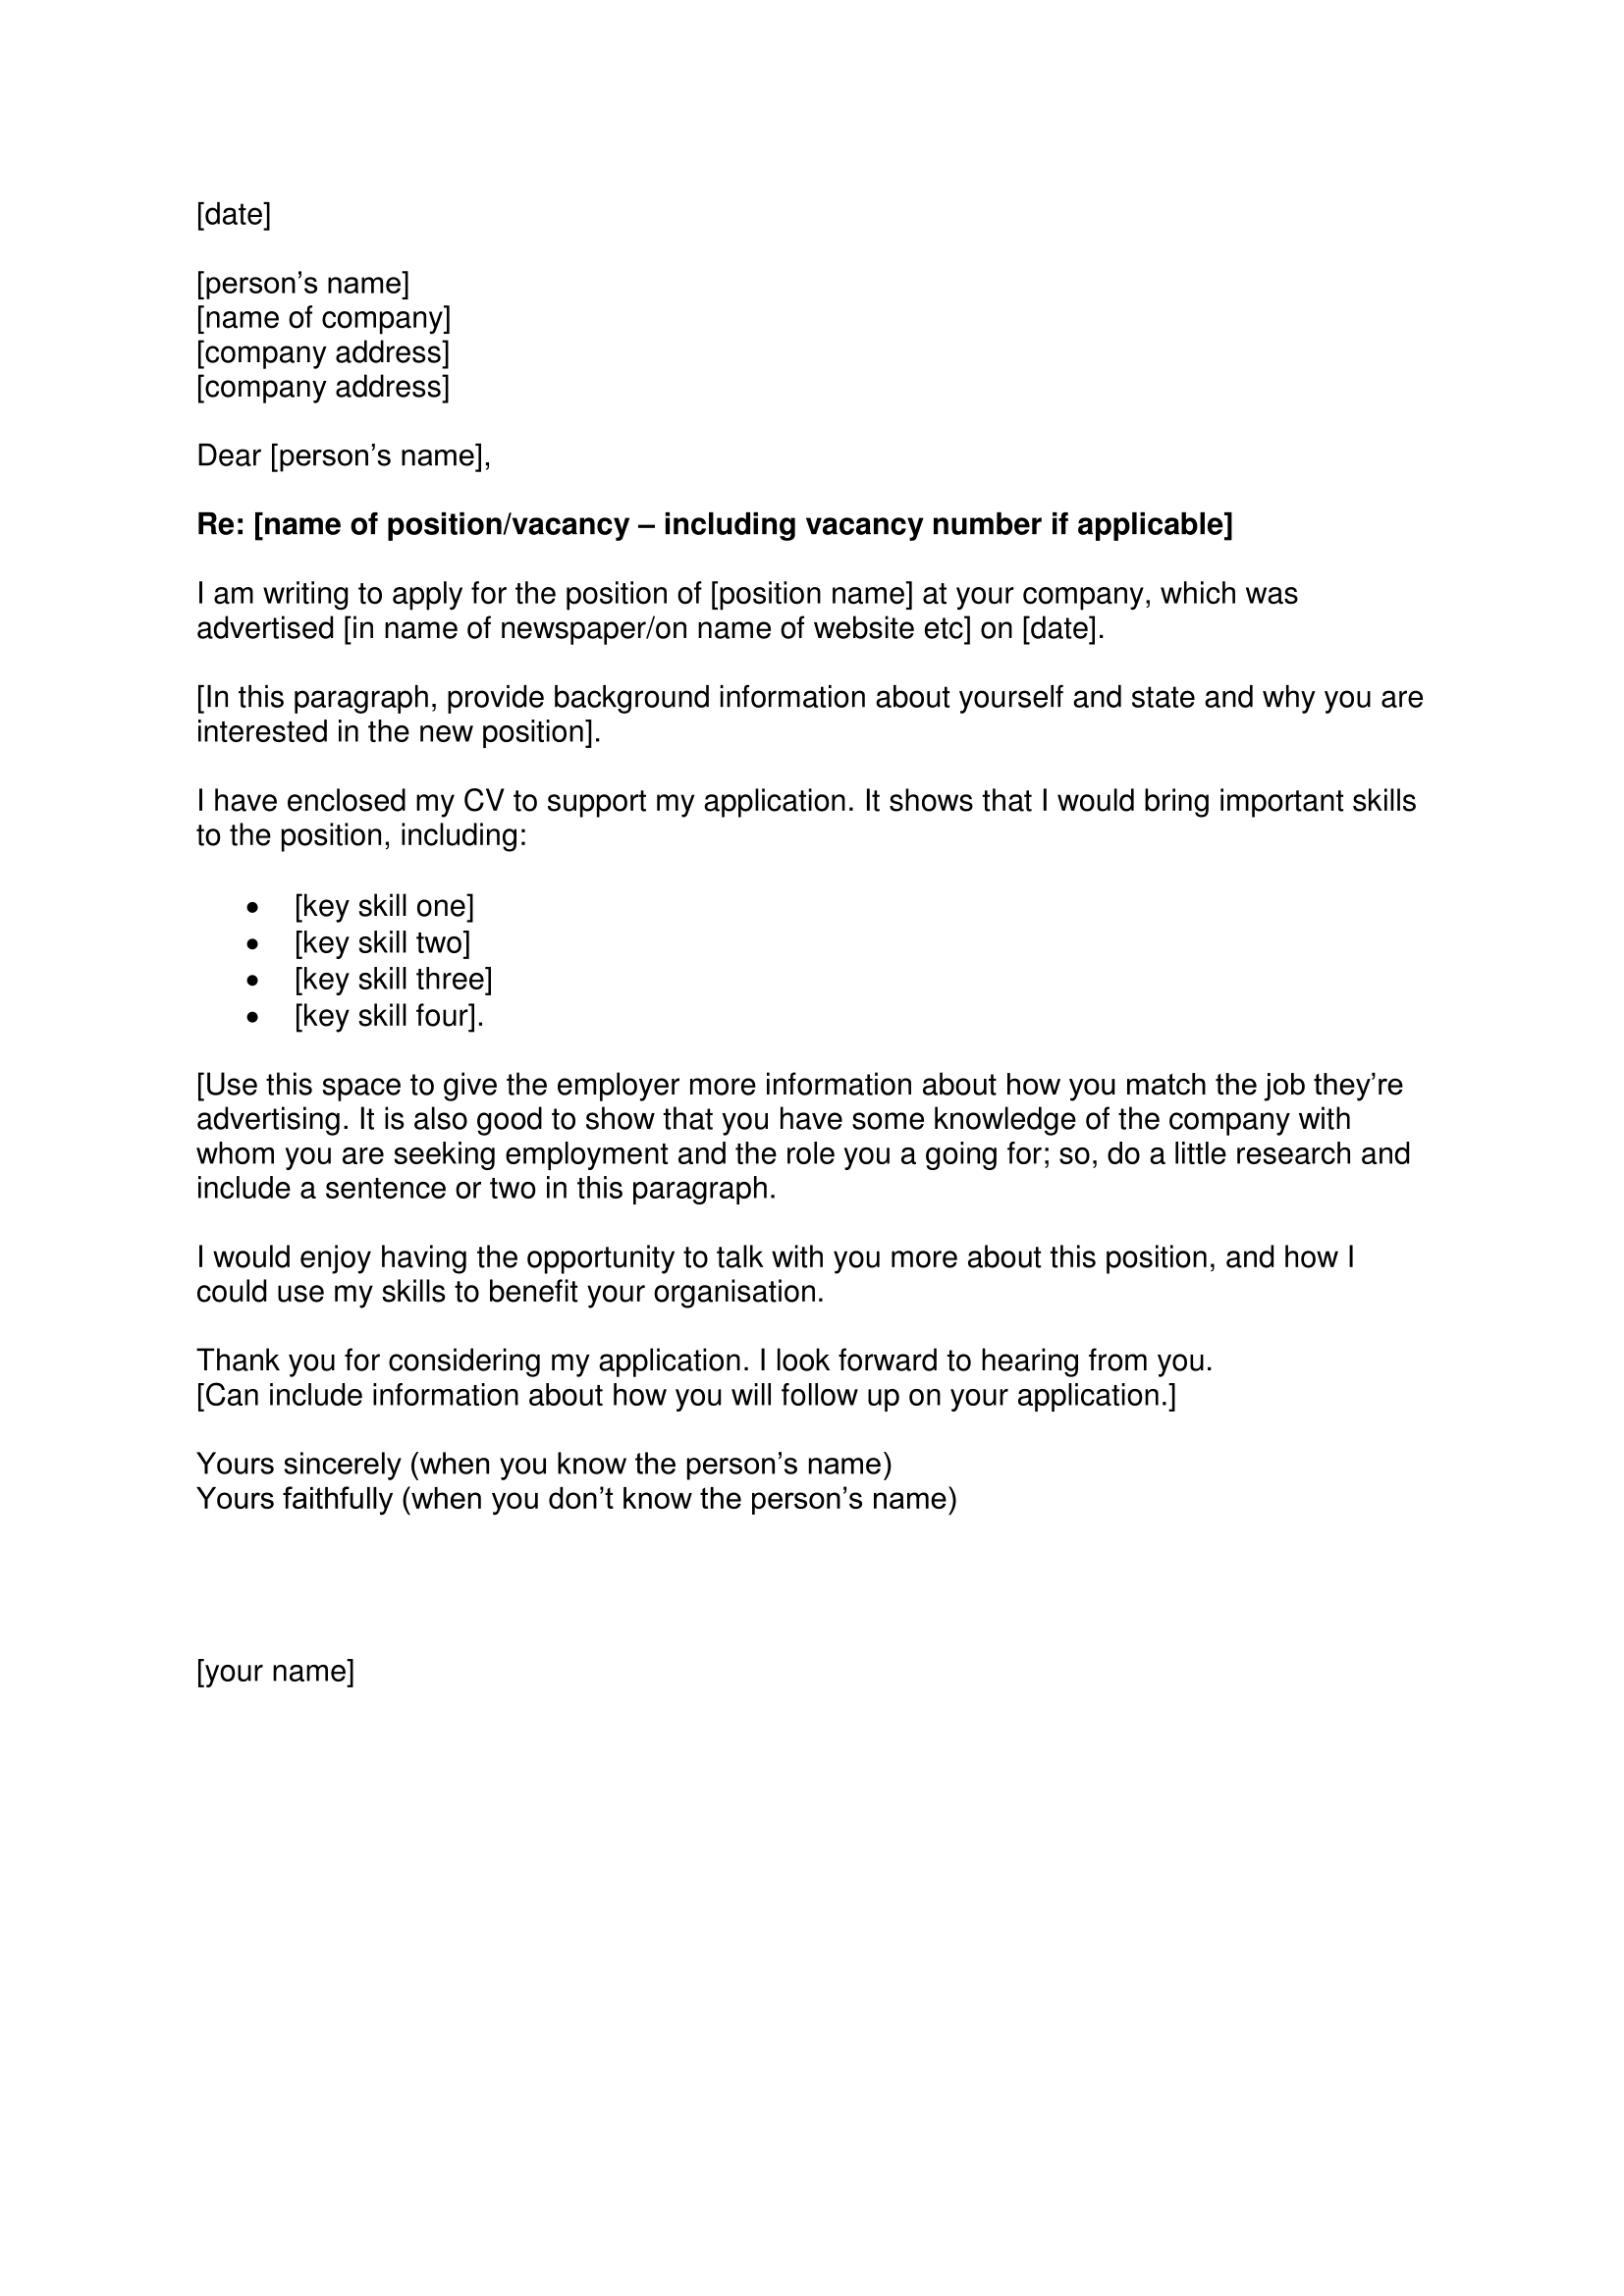 Professional job application letter format